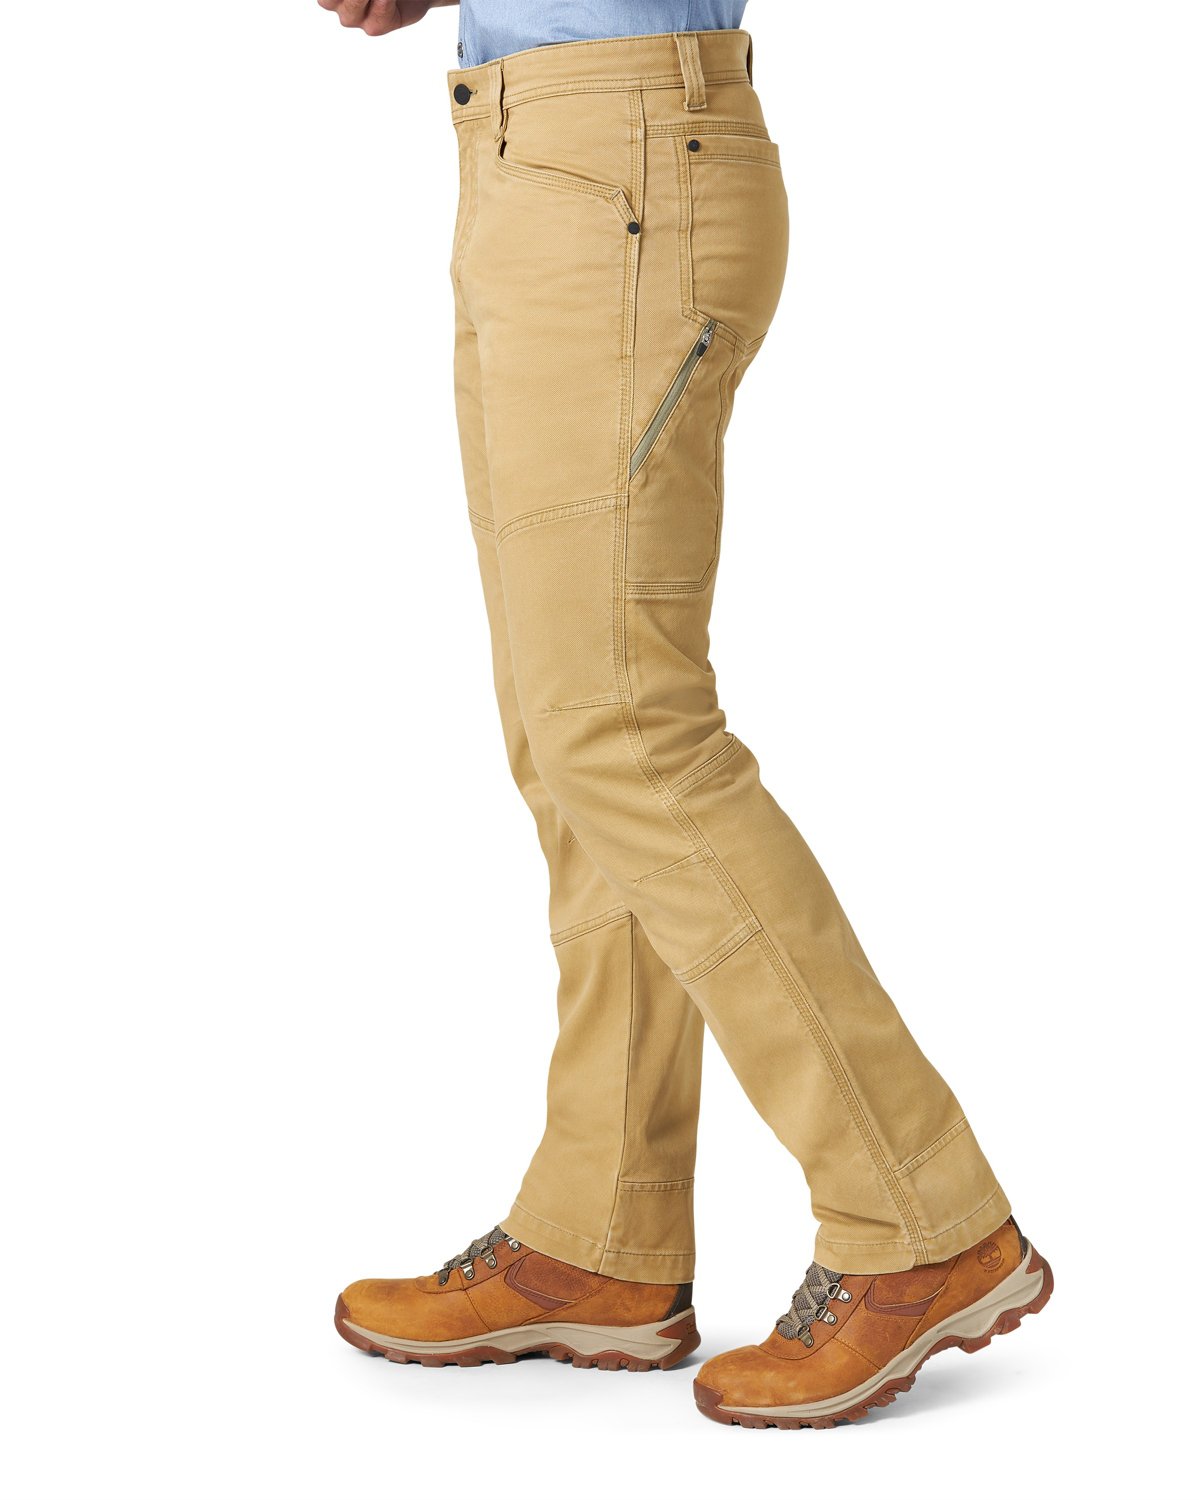 Wrangler Men's ATG Reinforced Utility Pants | Academy